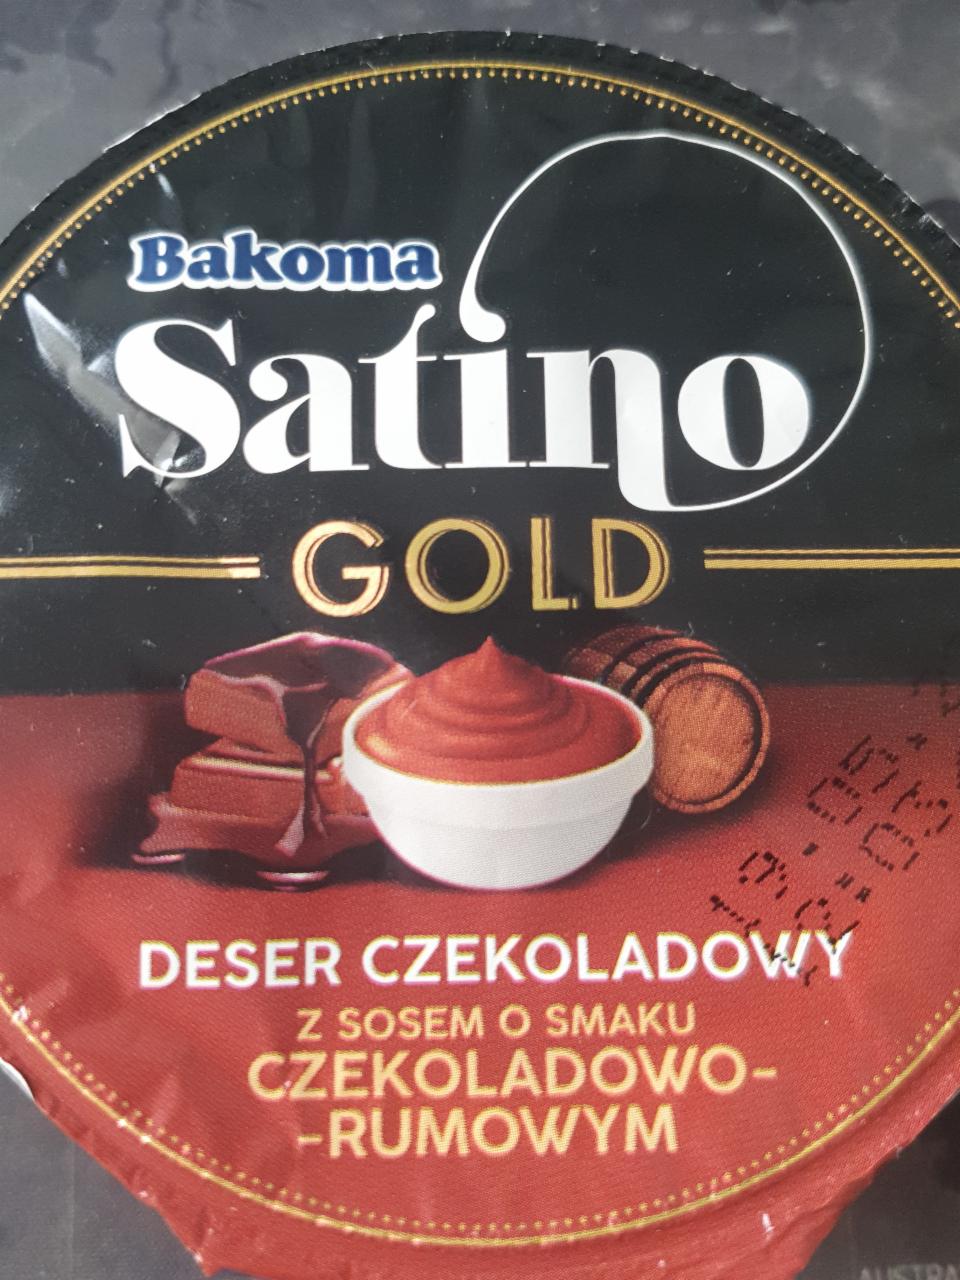 Фото - Satino gold desert czekoladowy Bakoma